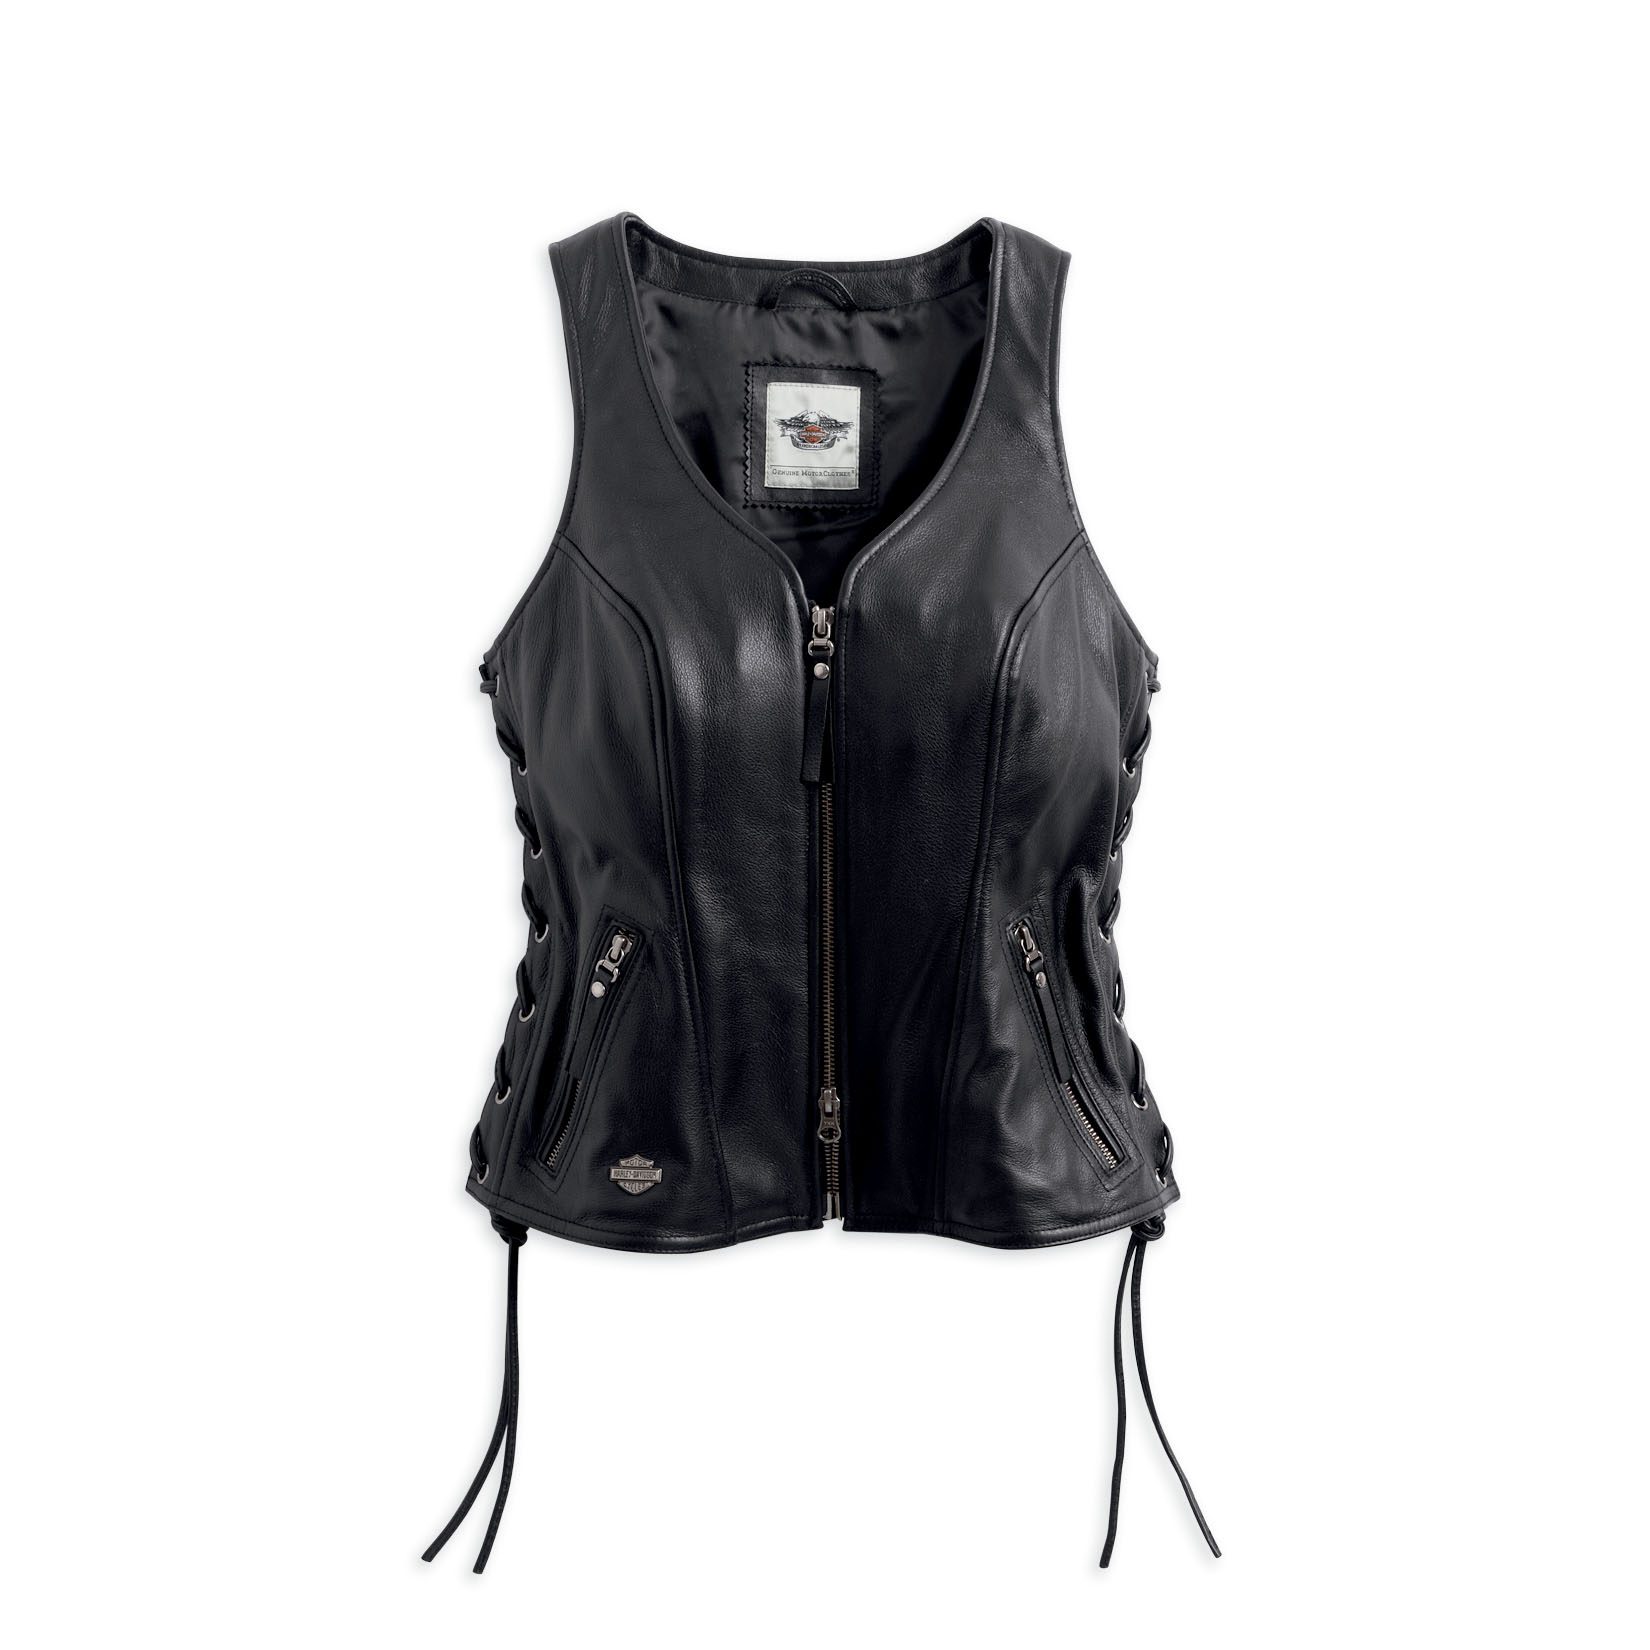 https://h-dalicante.es/wp-content/uploads/2021/03/H98071-14VW-Chaleco-mujer-de-cuero-Harley-Davidson%C2%AE-Woman-Avenue-Leather-Vest.jpg